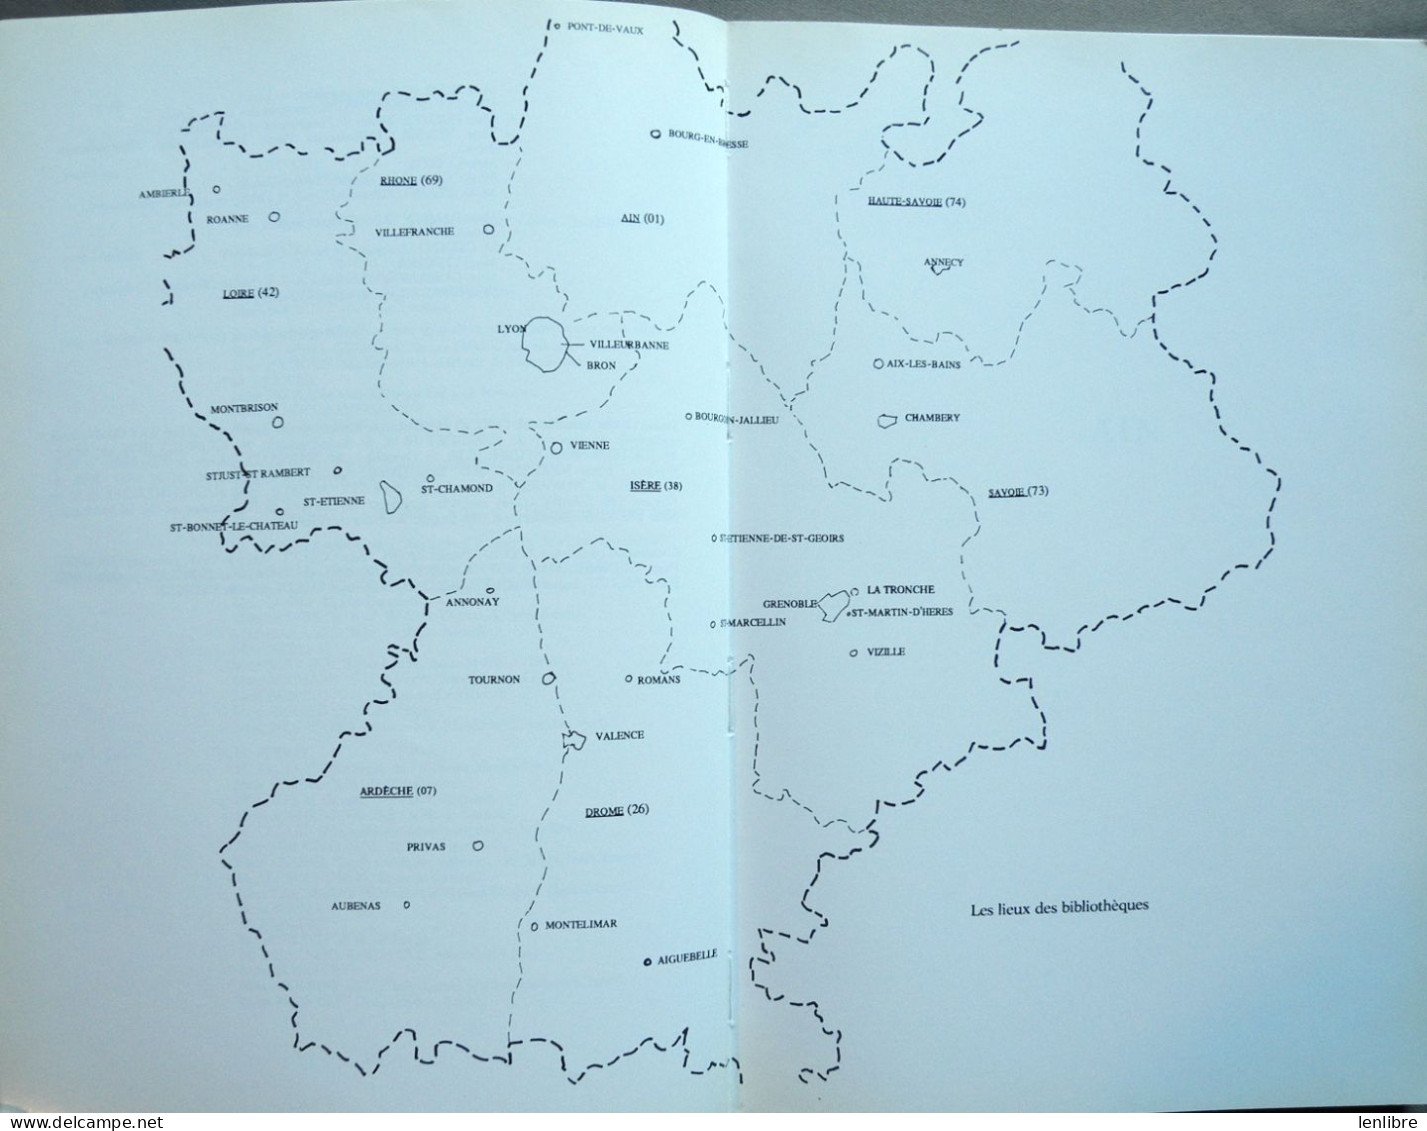 ITINERAIRES. Patrimoine Ecrit En Rhône-Alpes. Acord / Editions Curandera. 1992. - Rhône-Alpes